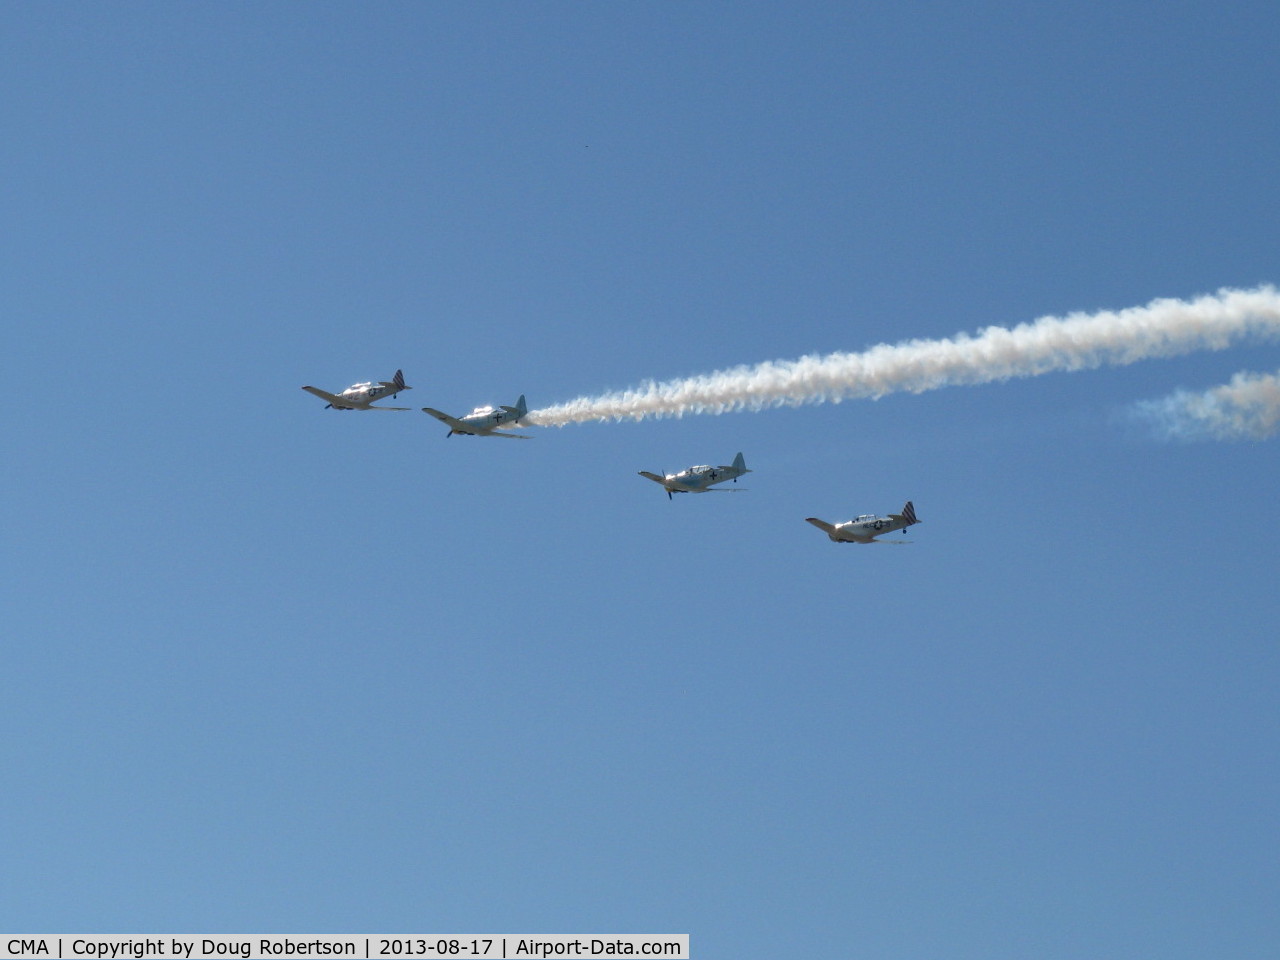 Camarillo Airport (CMA) - Condor Squadron fast echelon pass over Rwy 26 with smoke